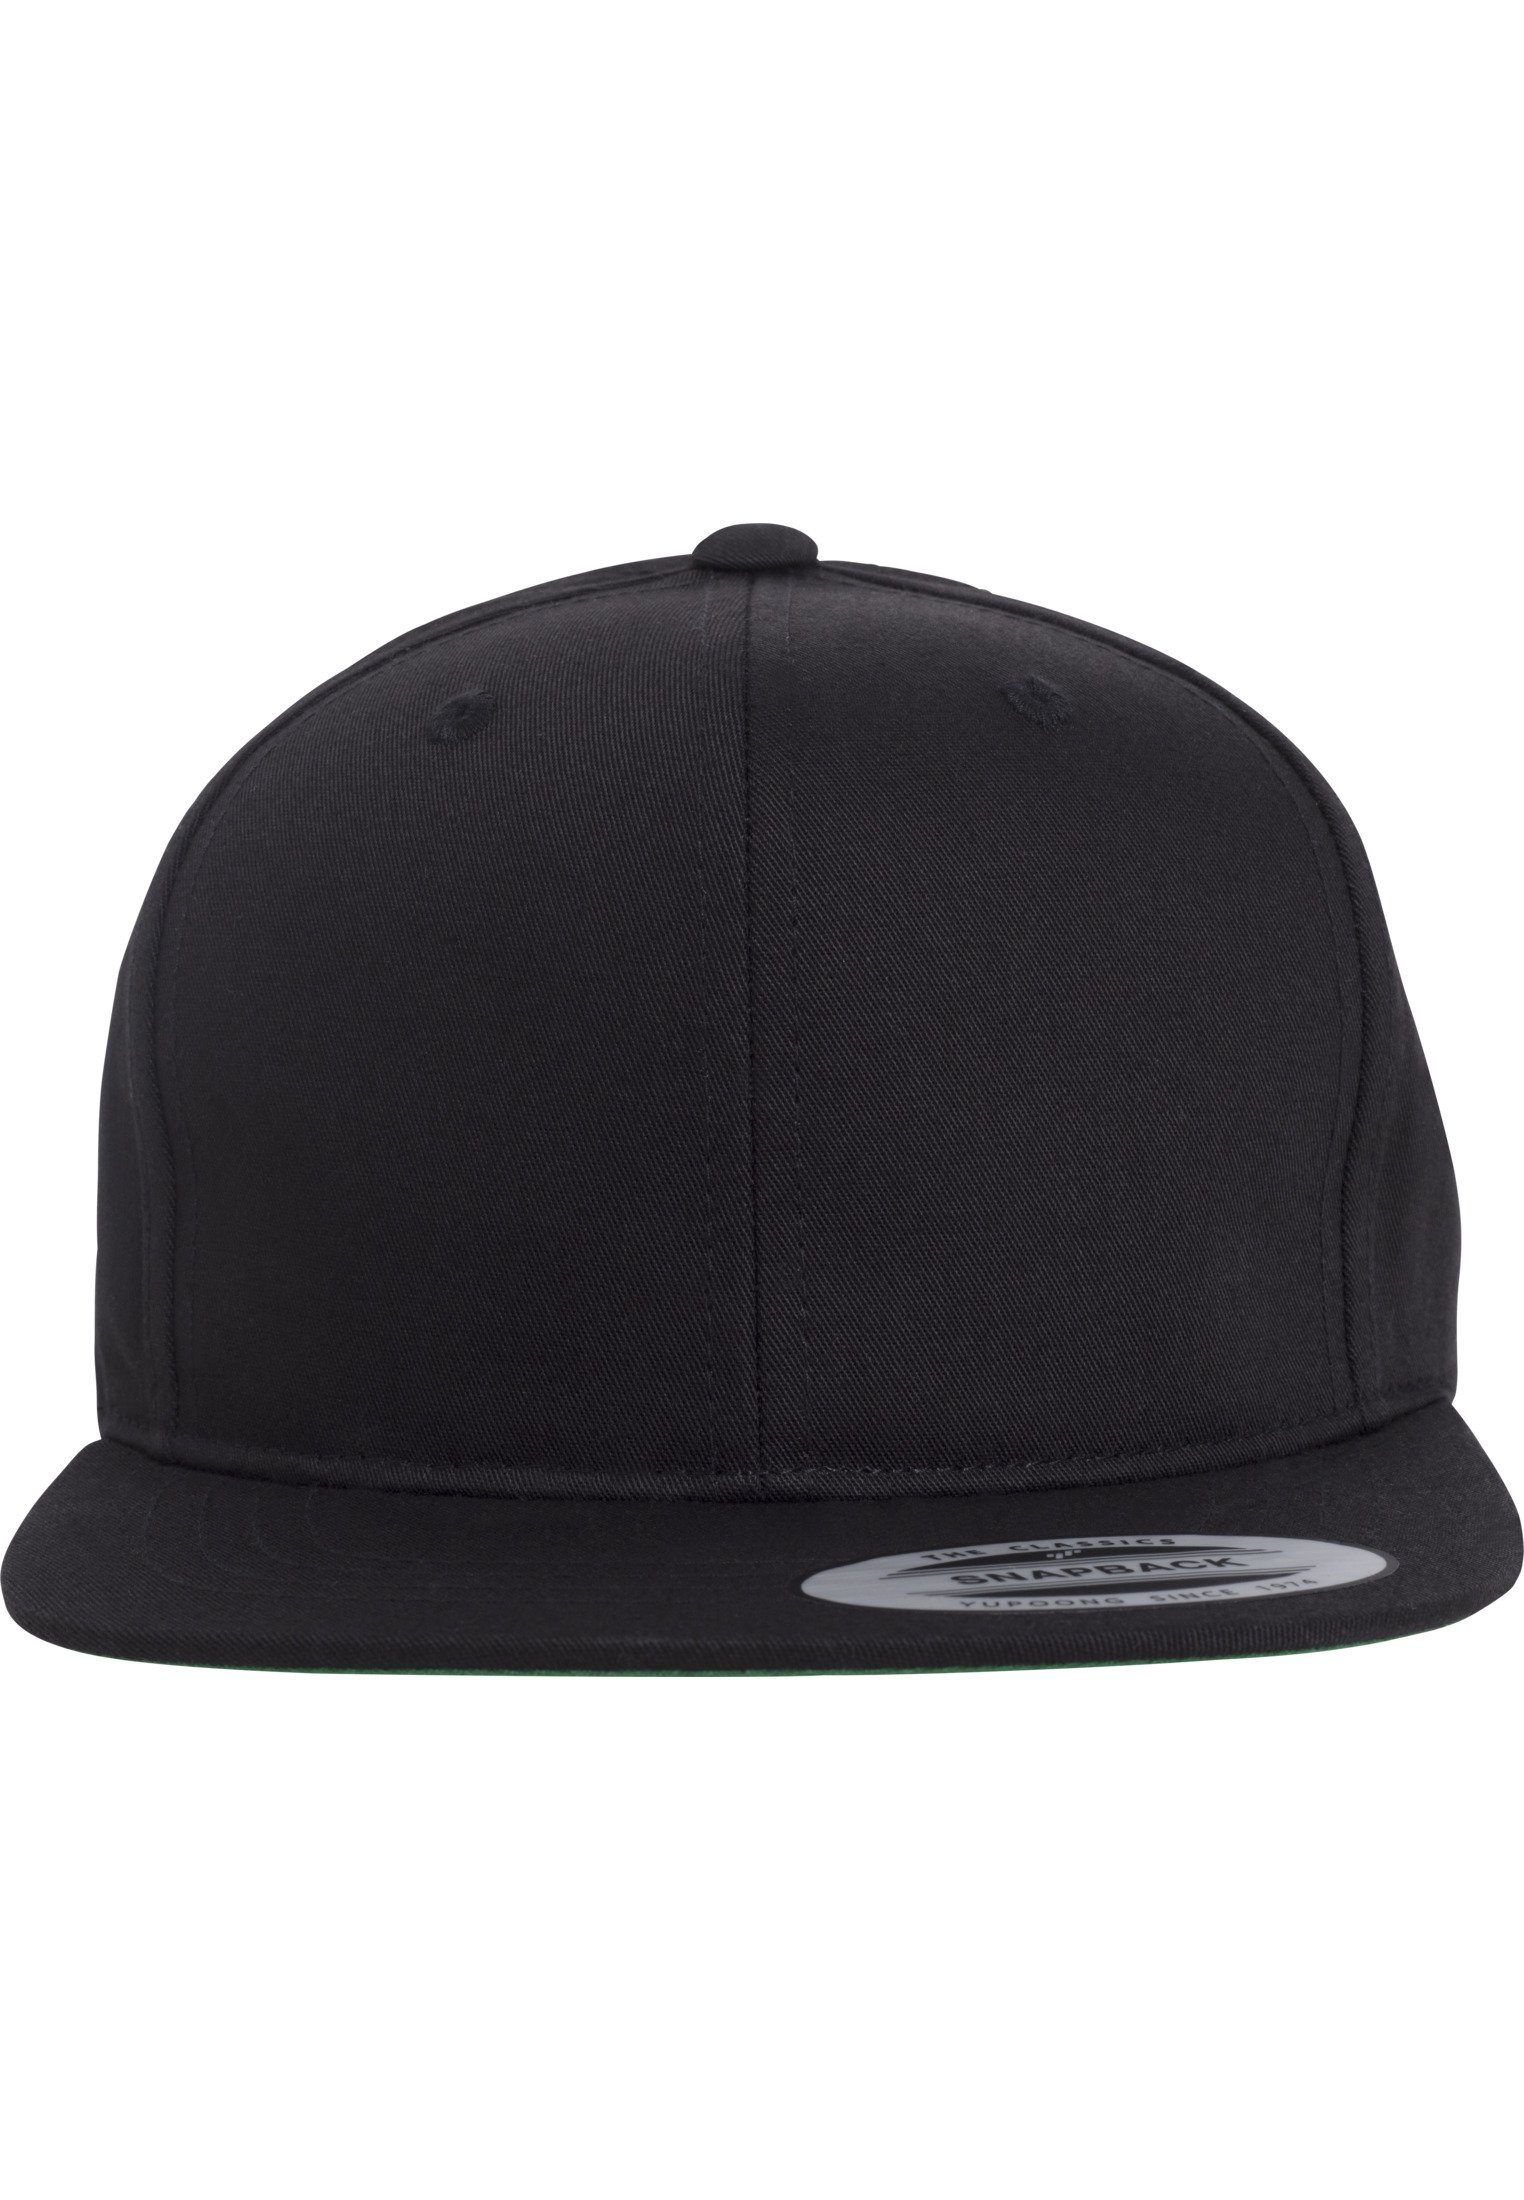 Flexfit Flex Cap Snapback Pro-Style Snapback black Twill Youth Cap